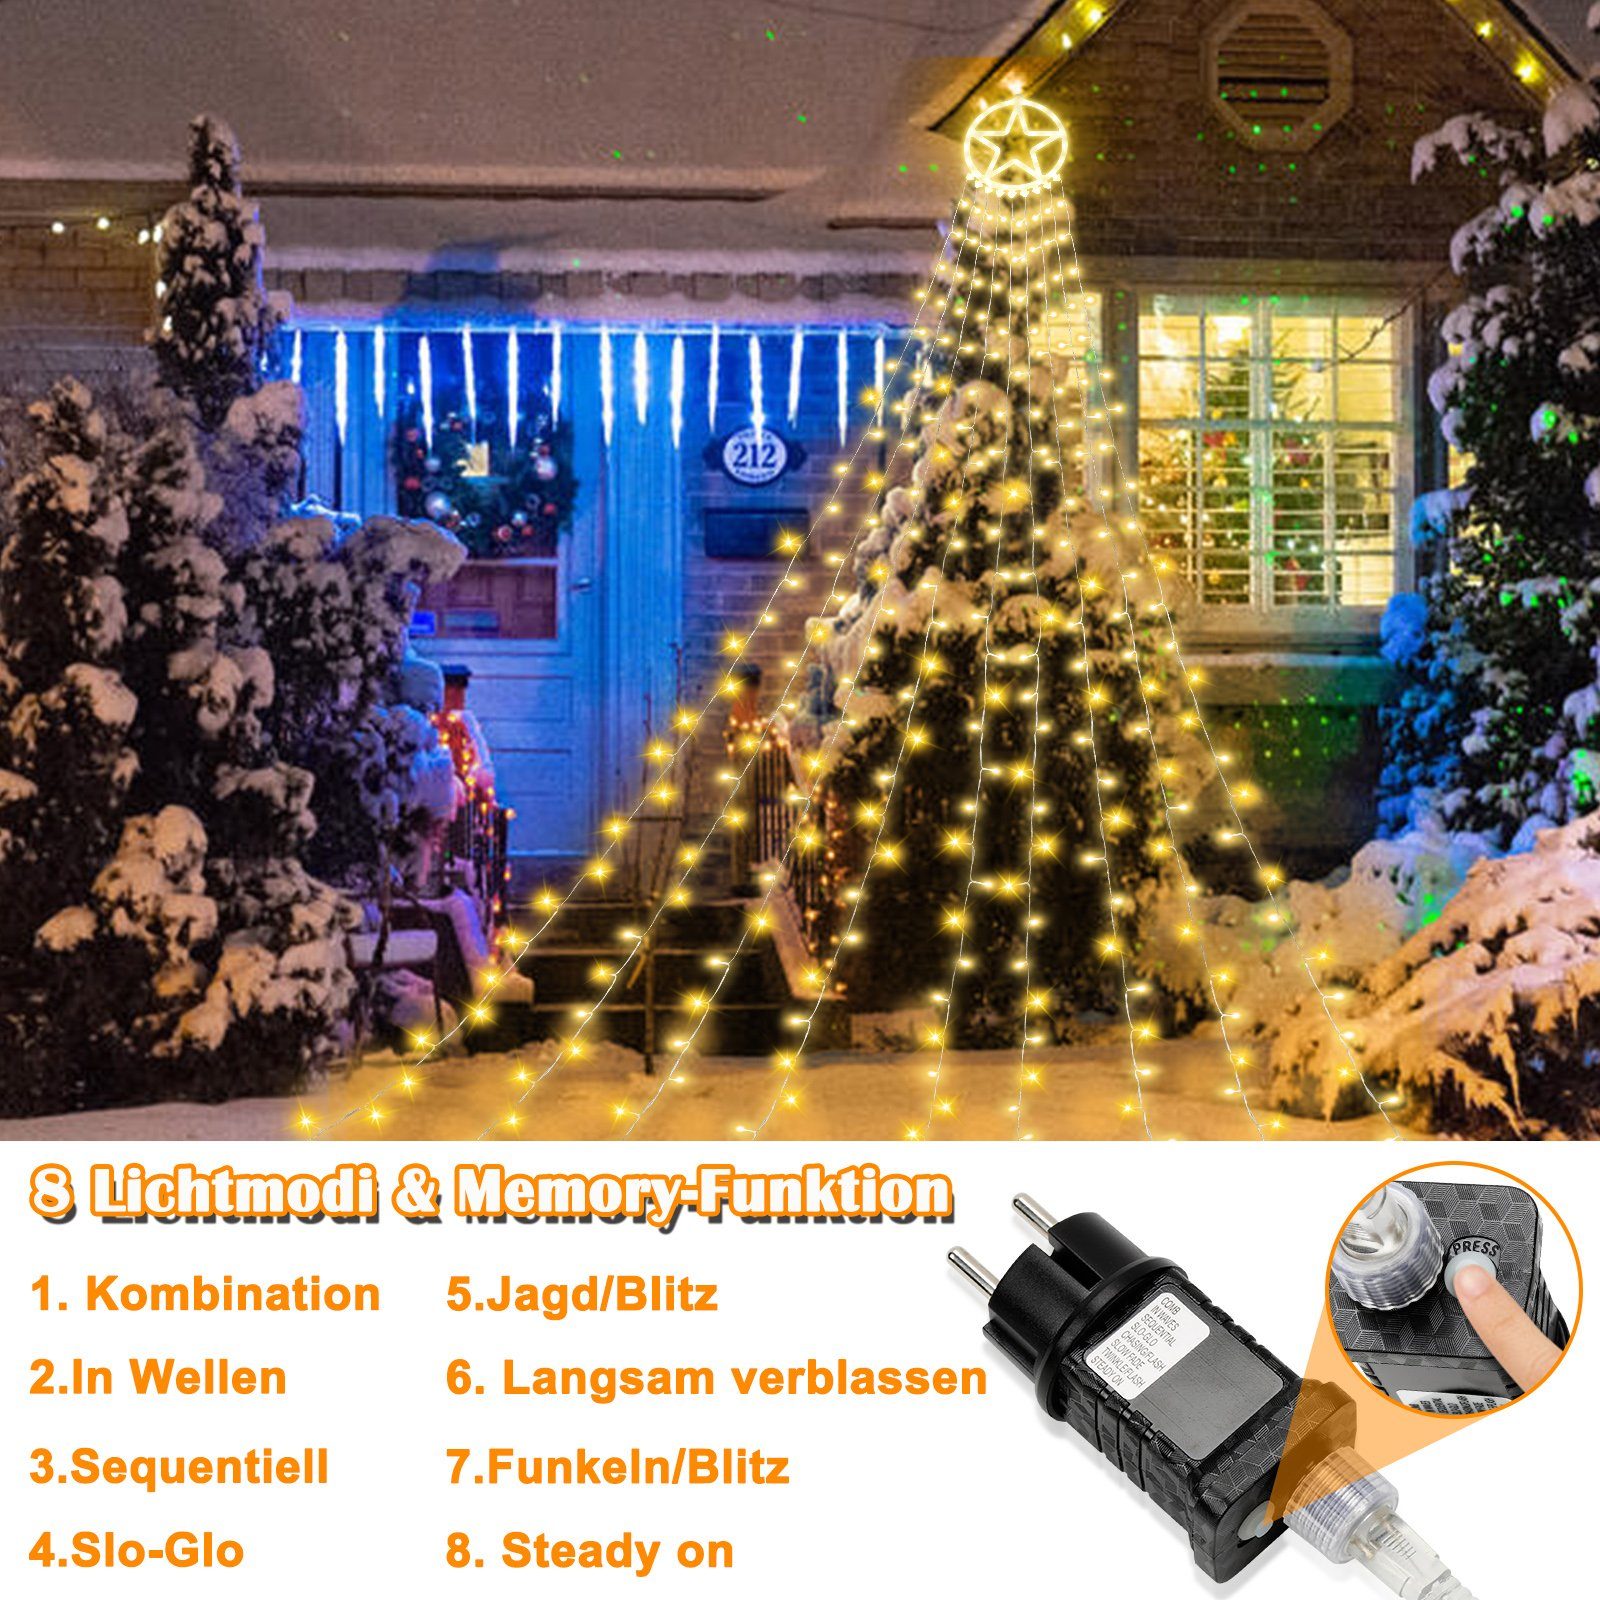 LED-Lichterkette LED Weihnachtsbaumkette Warmweiß 319 Weihnachtsbaum LEDs Gimisgu Lichterkette